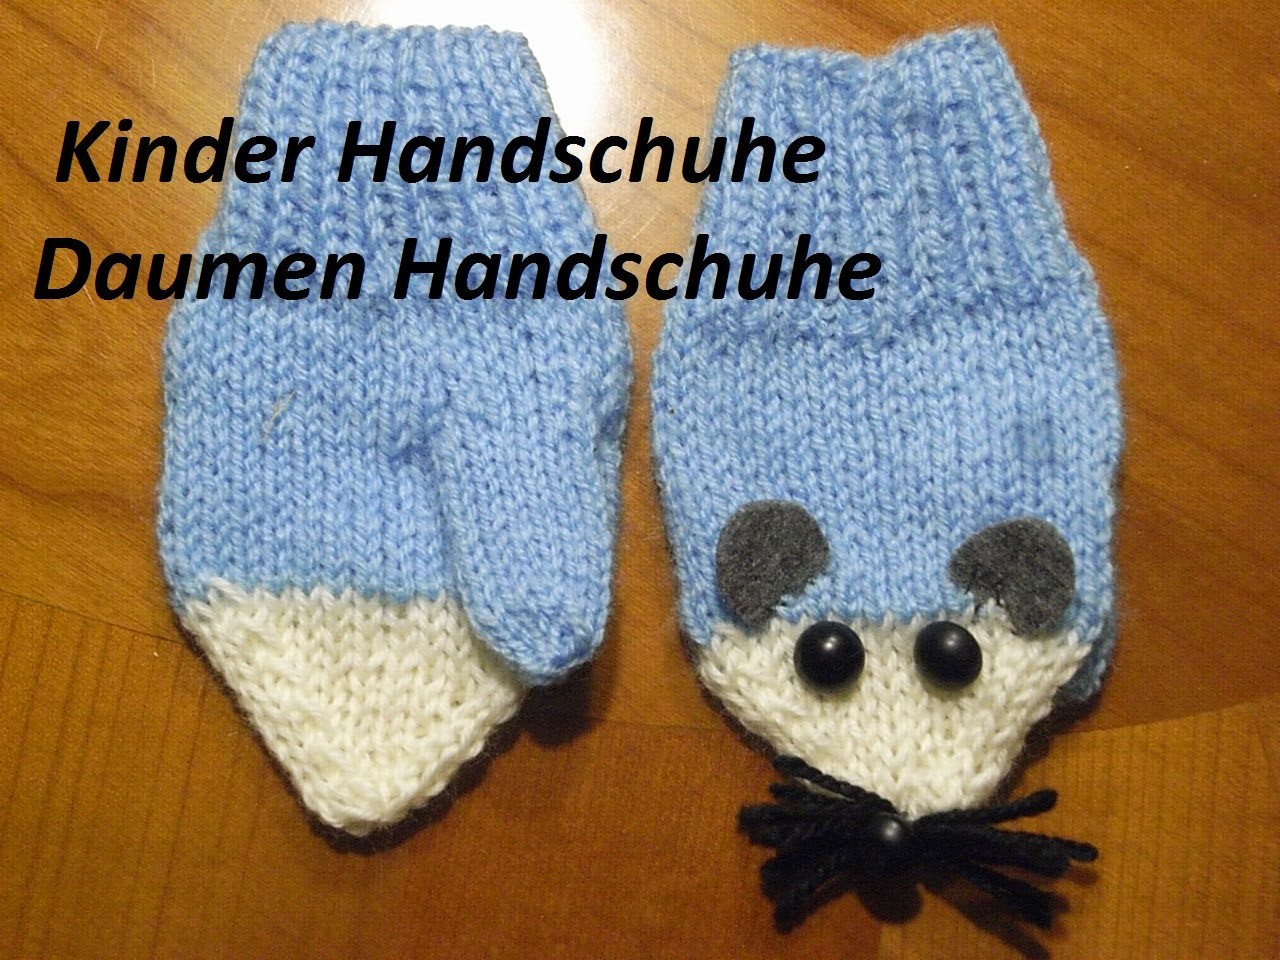 Kinder Handschuhe* Daumen Handschuhe Stricken* Knitting*DIYTutorial *Handarbeit